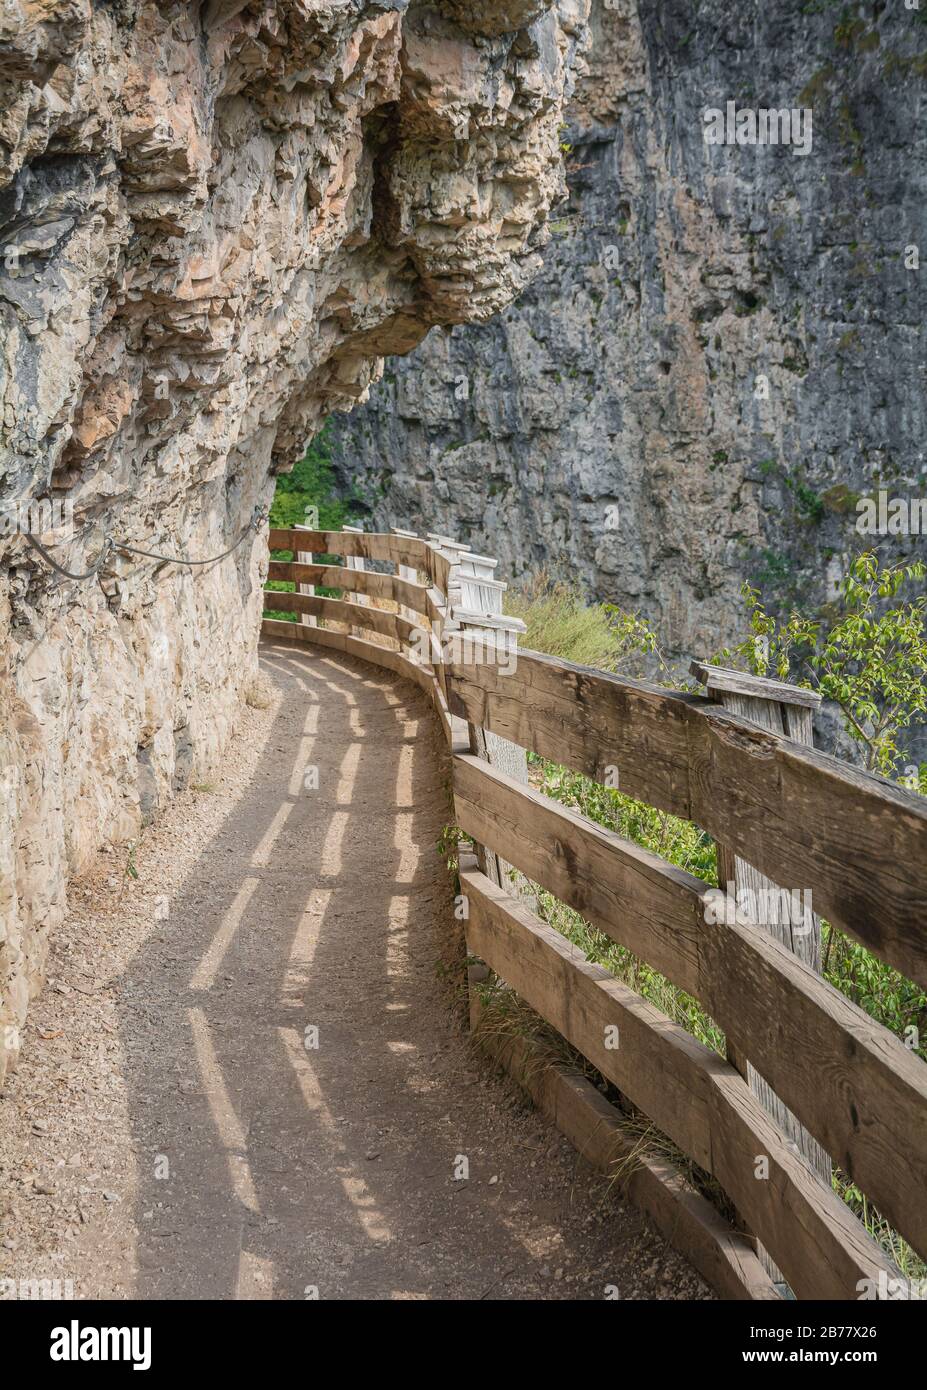 Panoramastrasse zum Heiligtum von San Romedio trentino, Trentino Alto adige, norditalien - Europa. Panoramaweg in den Fels gehauen Stockfoto